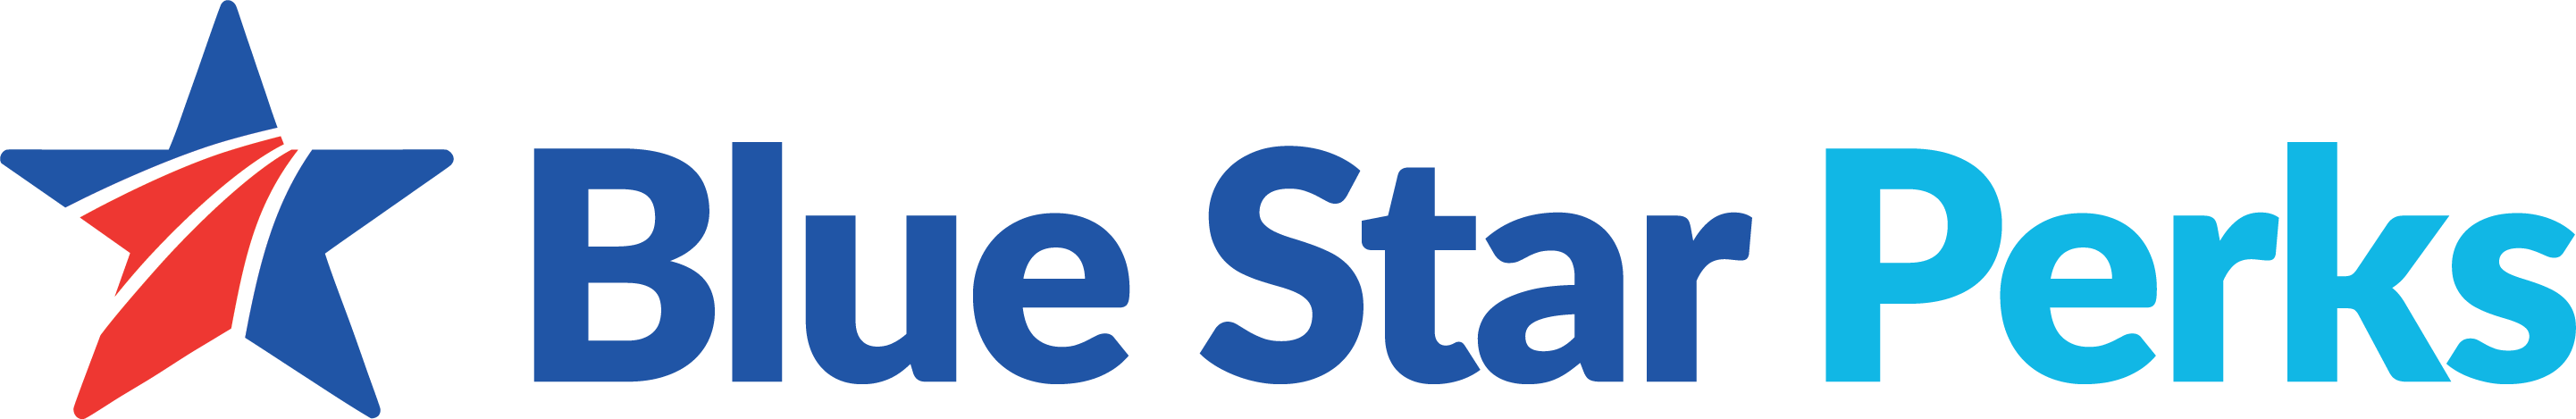 BSF_BlueStar_Perks_Logo_CMYK